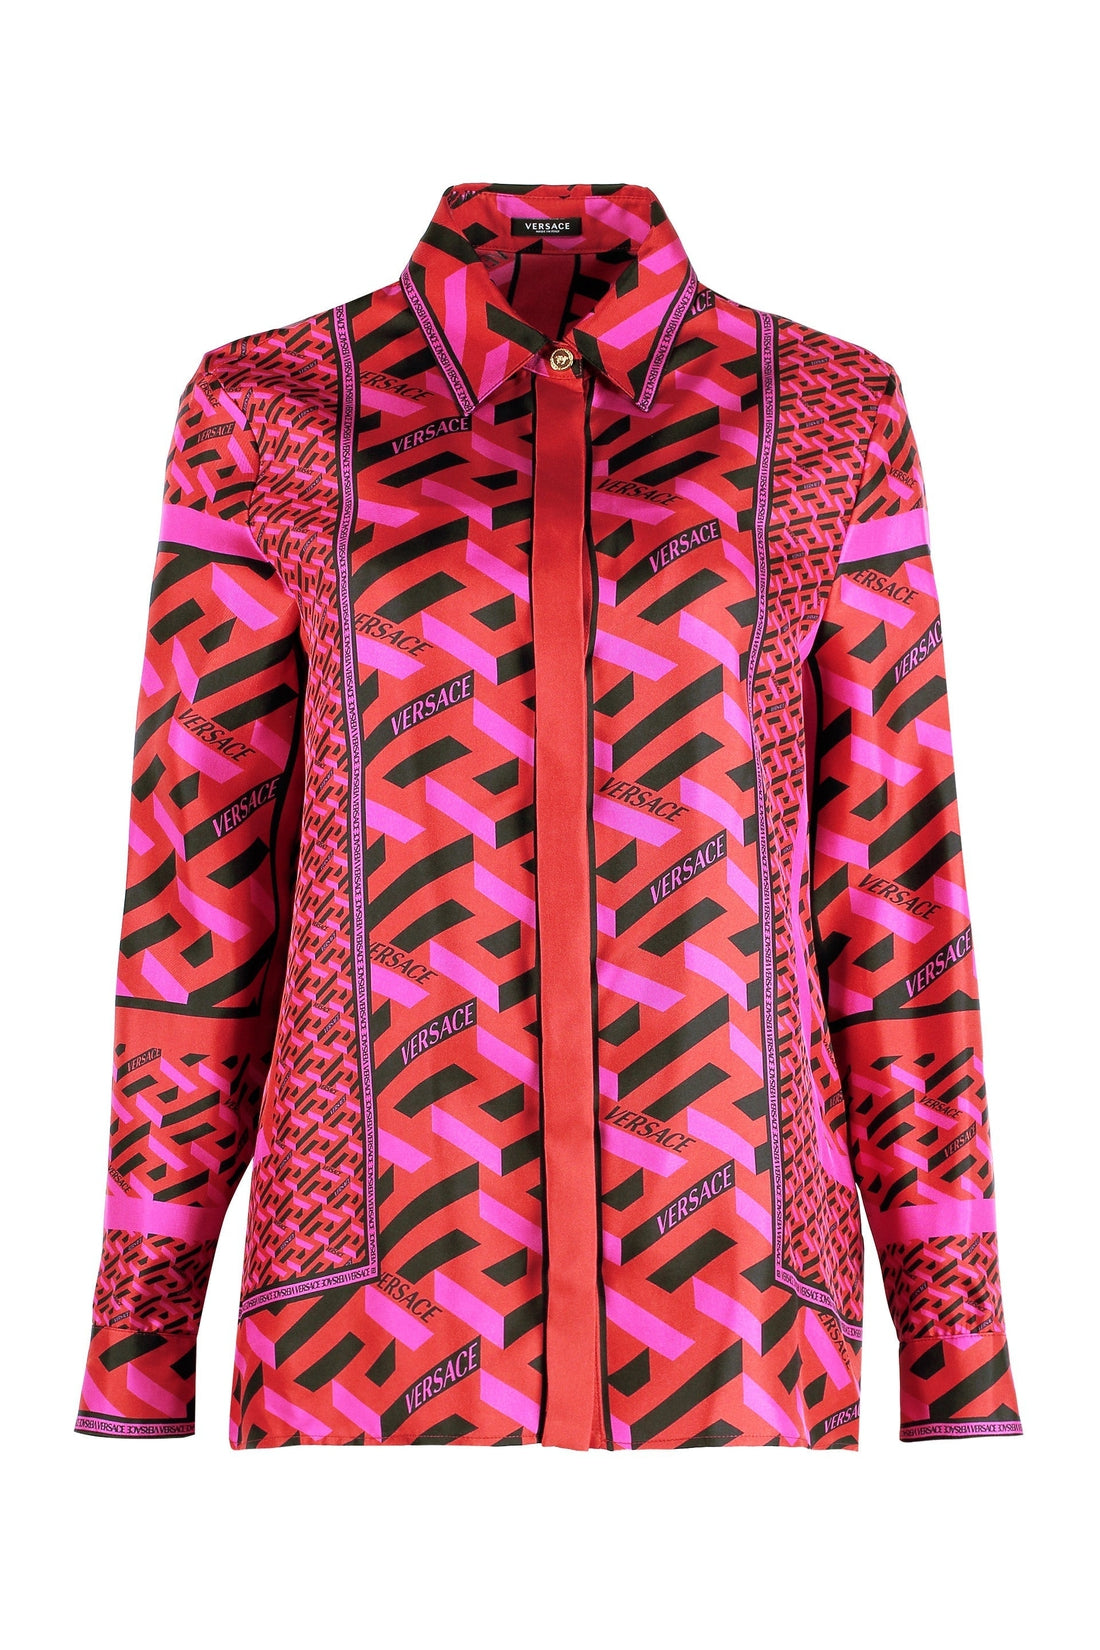 Versace-OUTLET-SALE-Printed silk shirt-ARCHIVIST